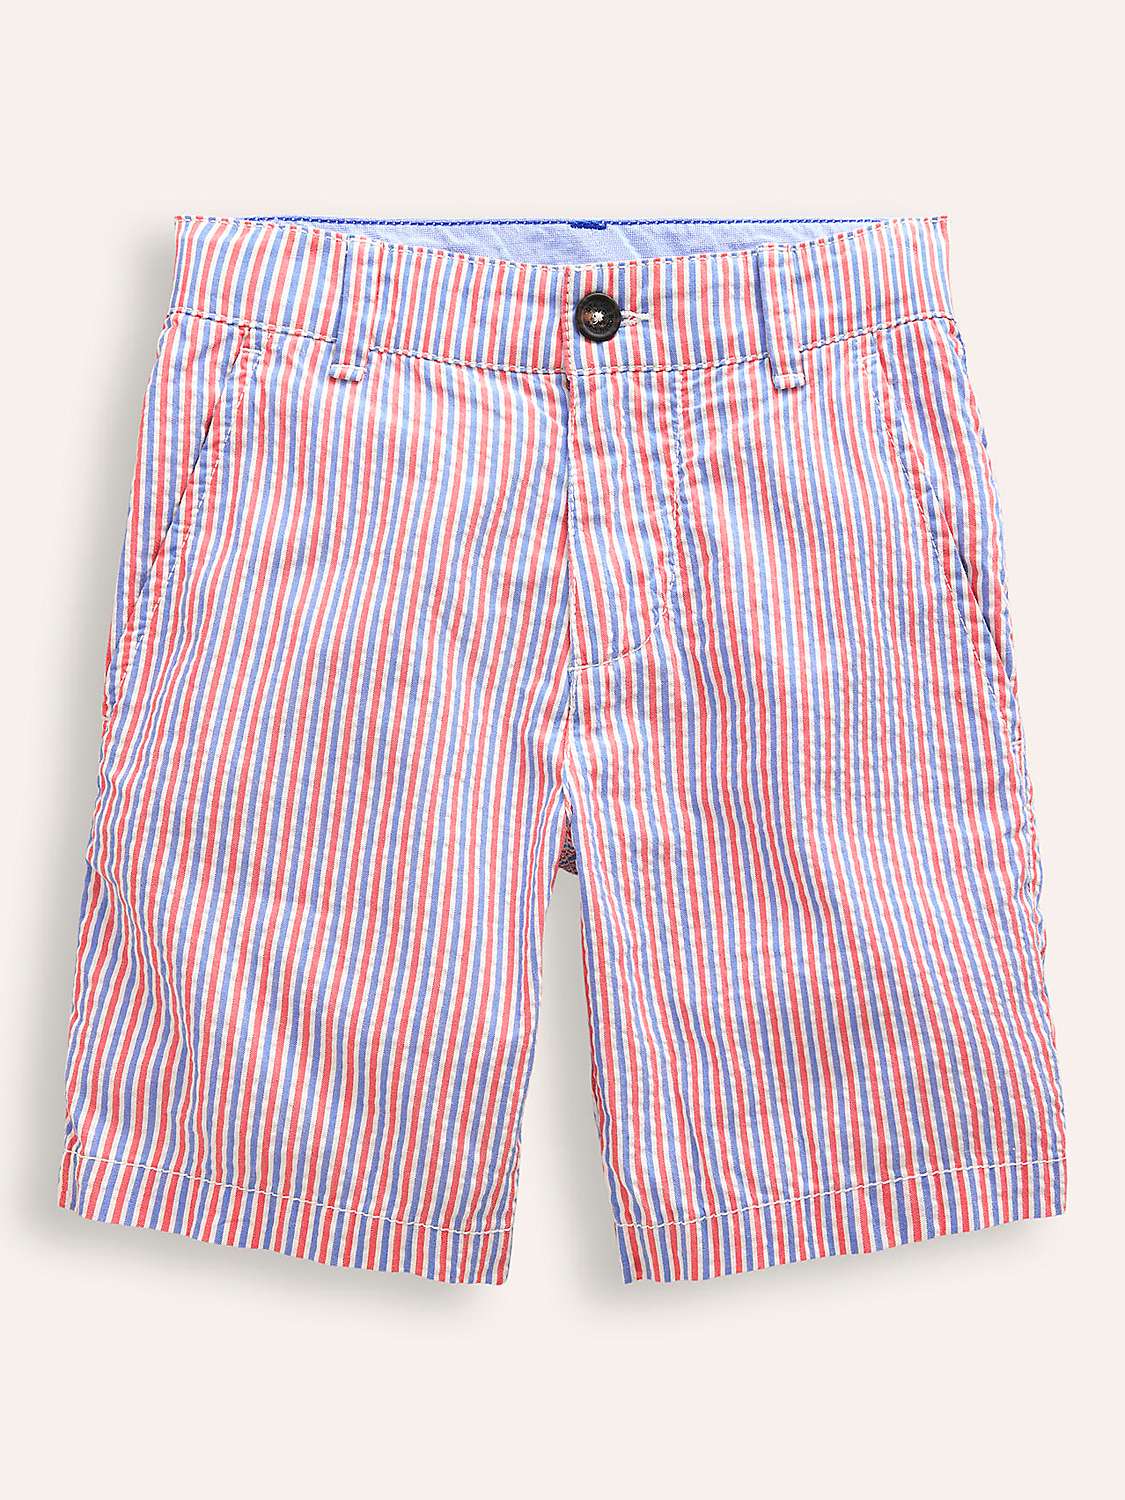 Buy Mini Boden Kids' Seersucker Stripe Chino Shorts, Jam Red/Blue Online at johnlewis.com